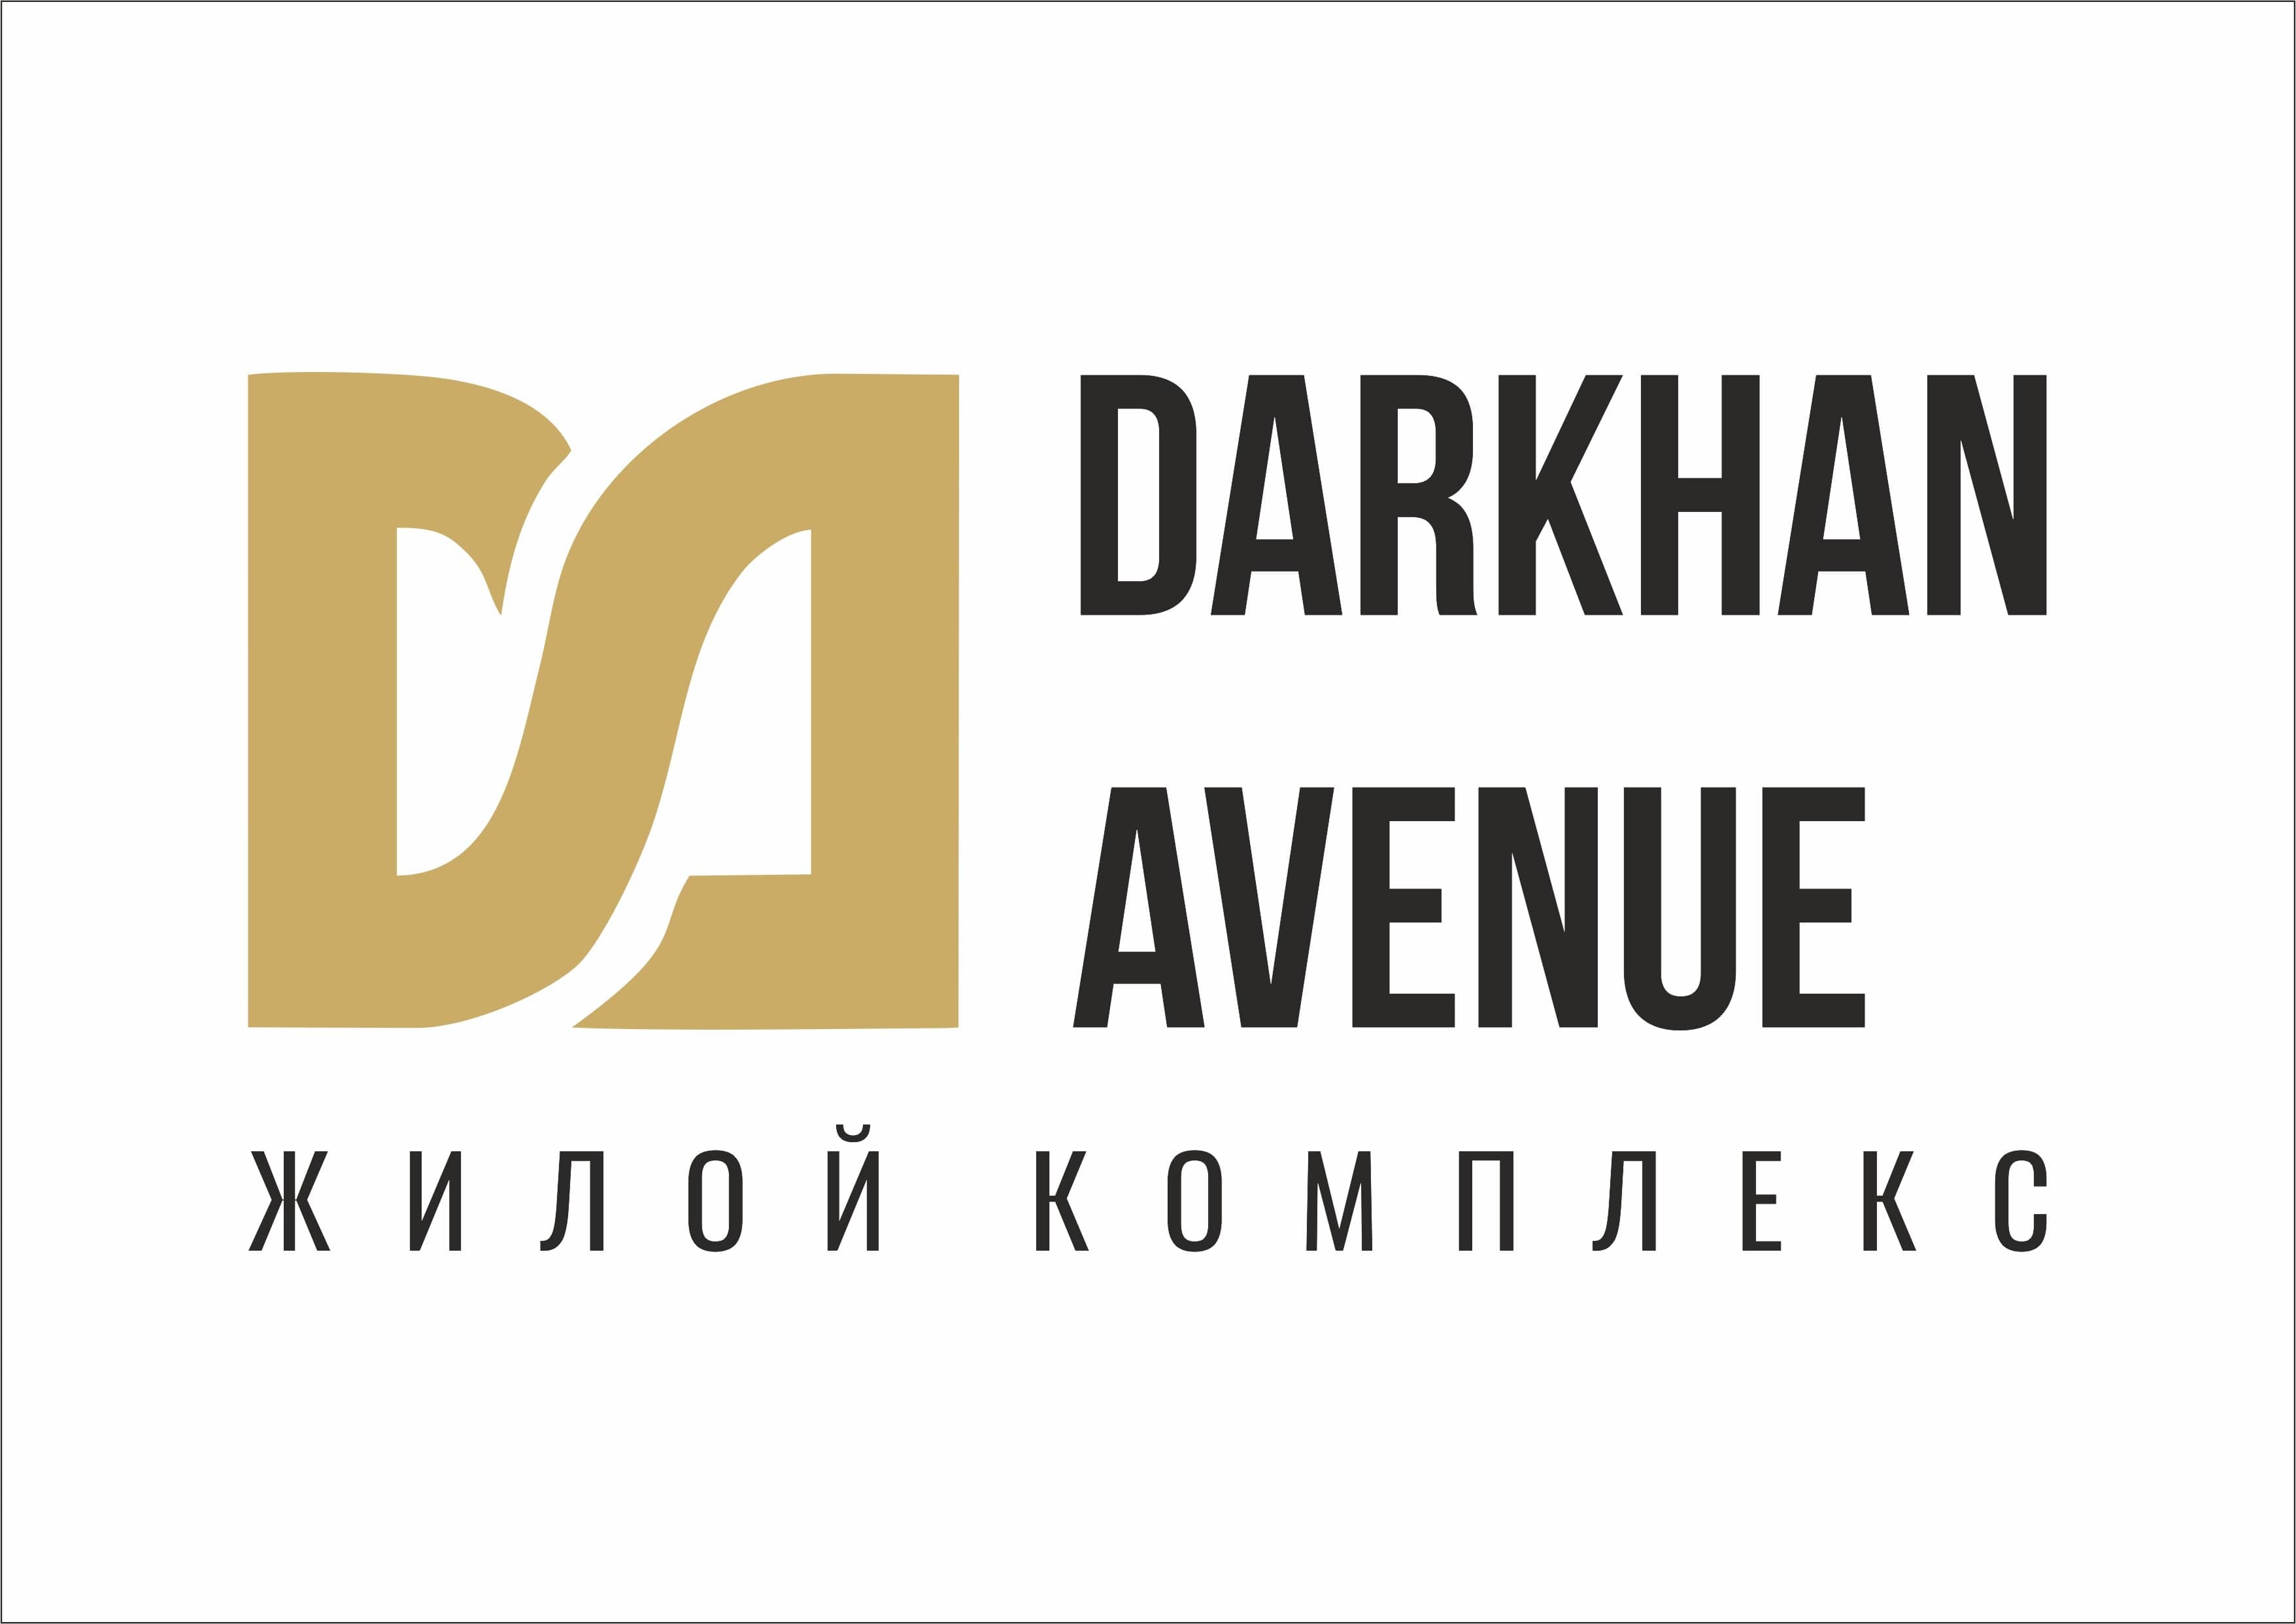  Darkhan Avenue